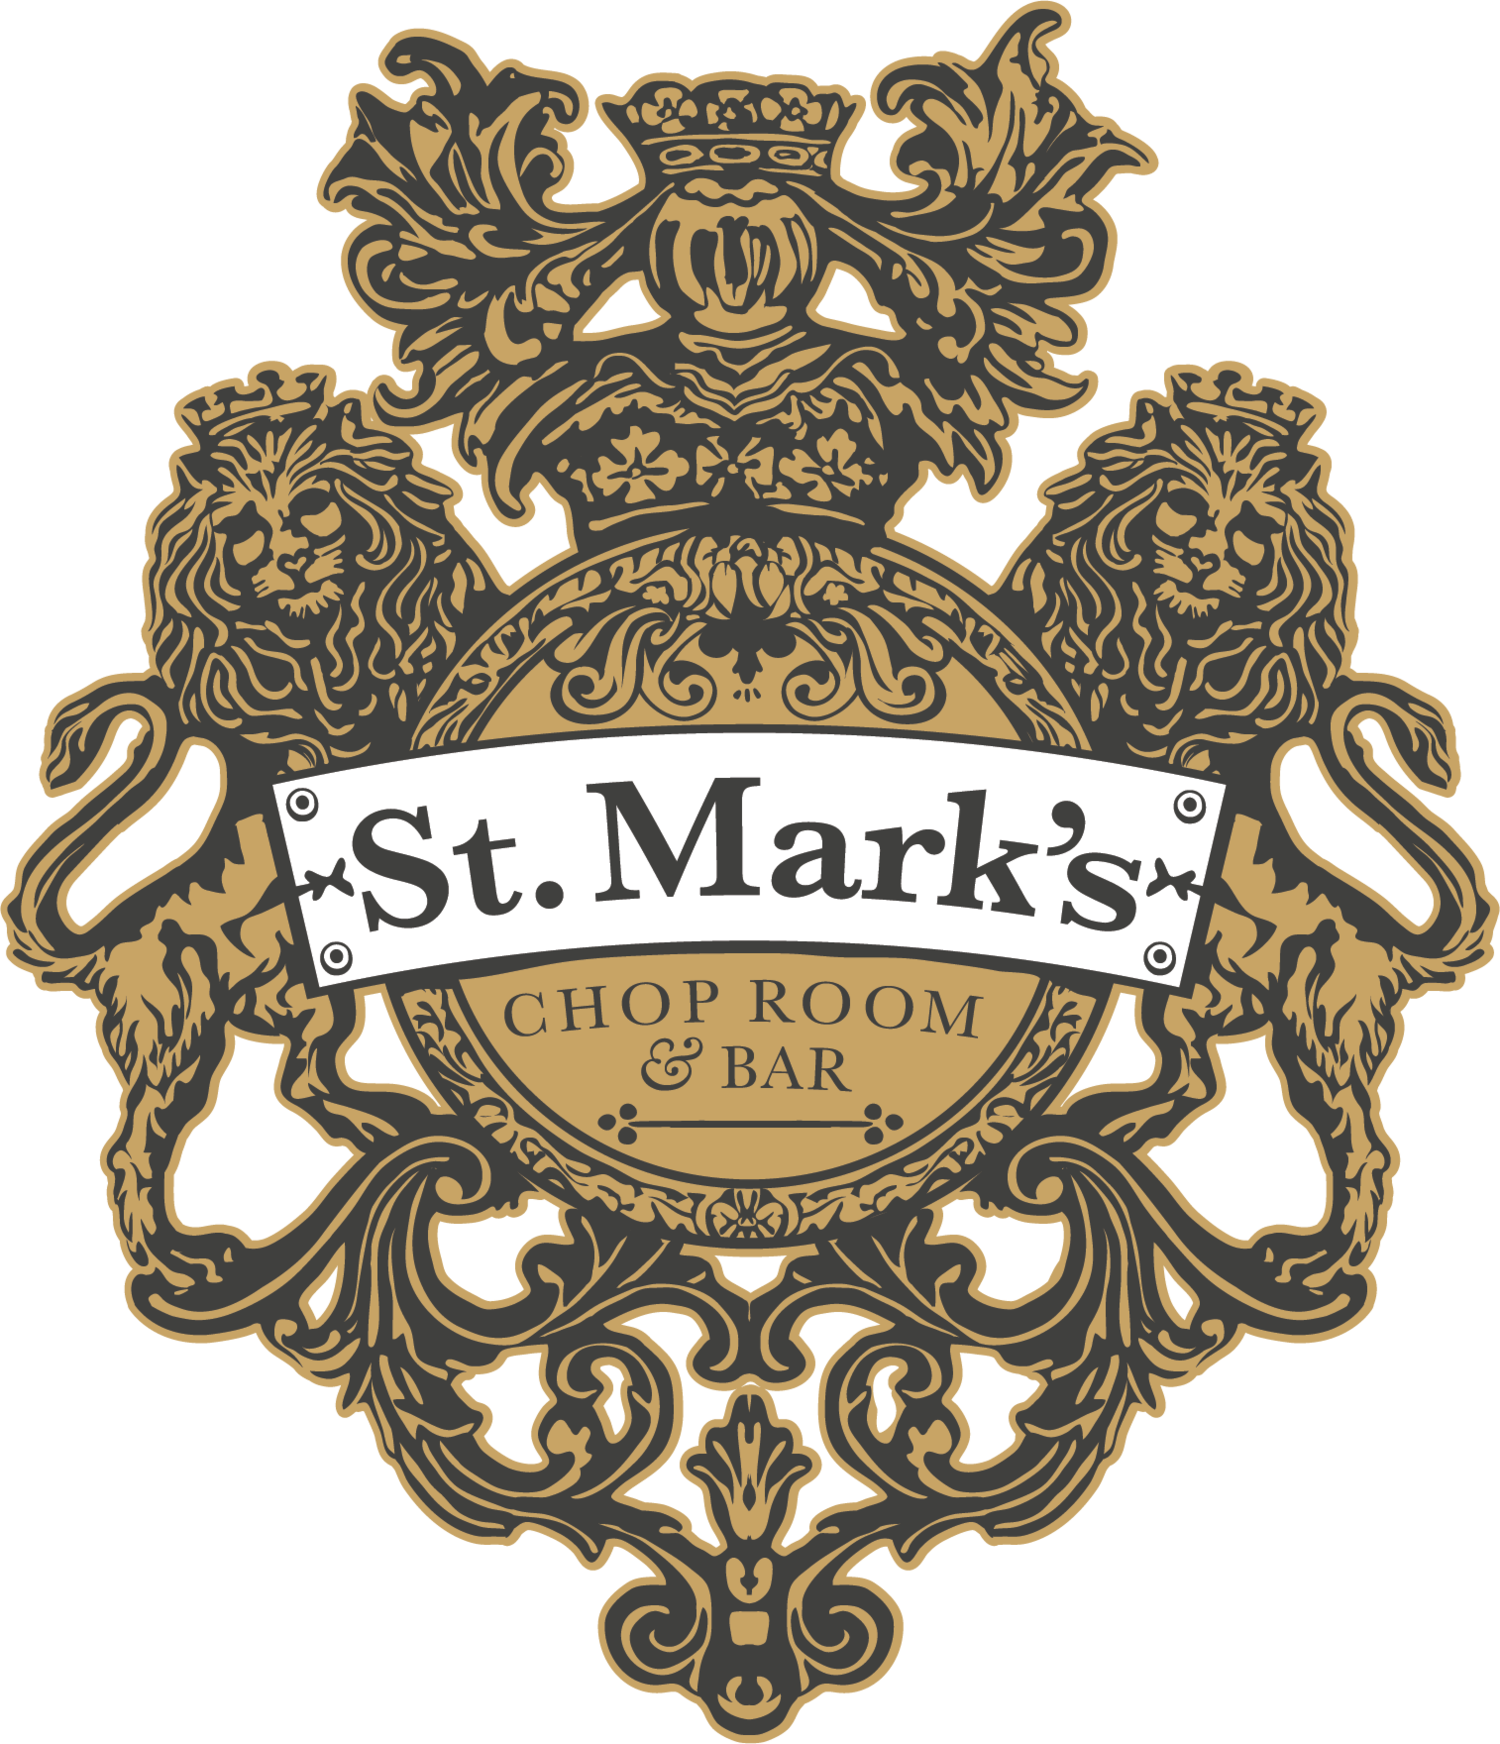 St. Mark's Chop Room